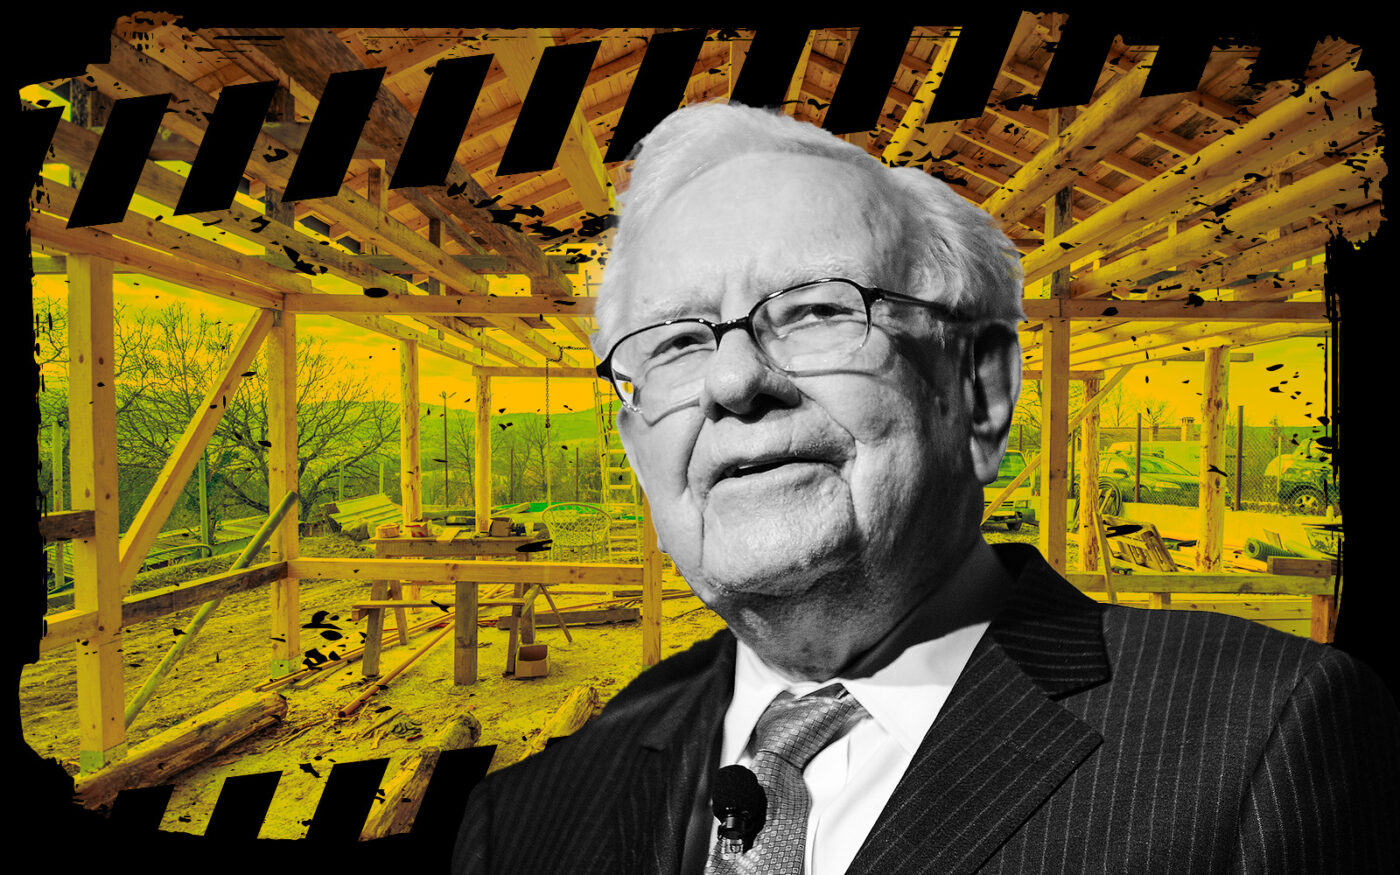 Warren-Buffett-Bets-Big-on-Homebuilders_Main-1400x875.jpg